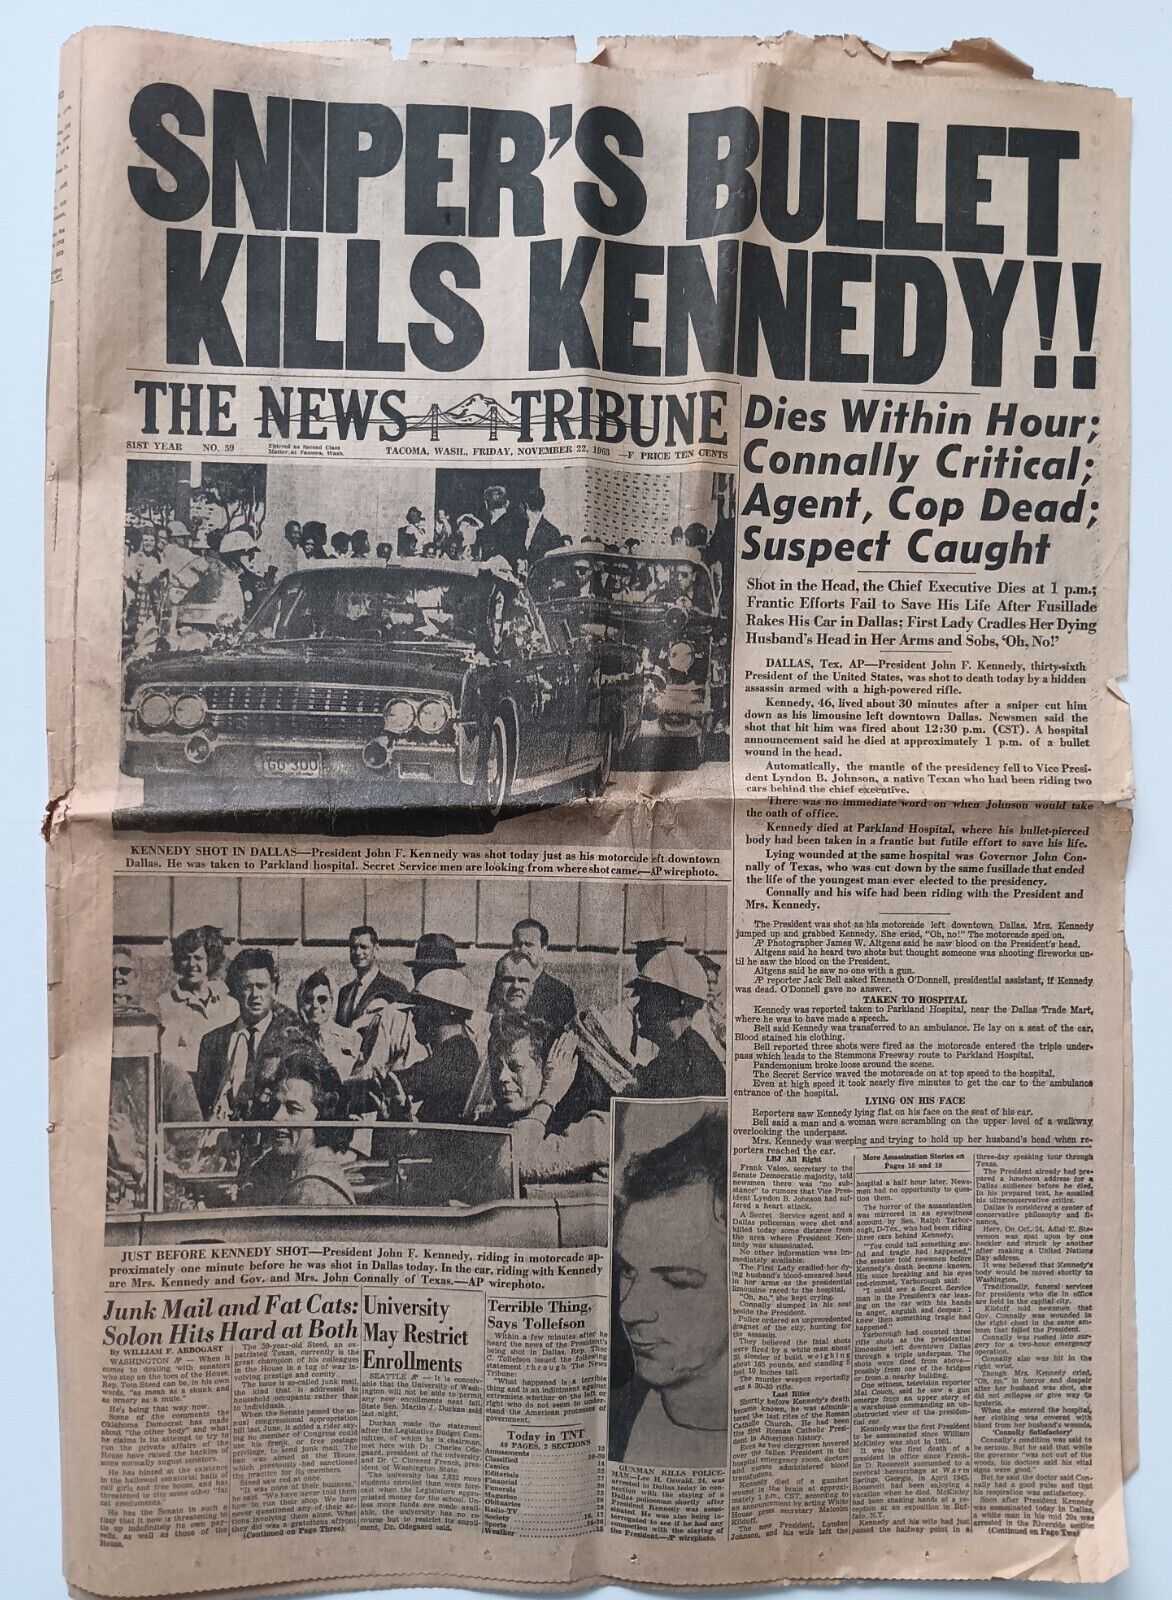 Newspaper The News Tribune 22 November 1963 Snipers Bullet Kills Kennedy Complet